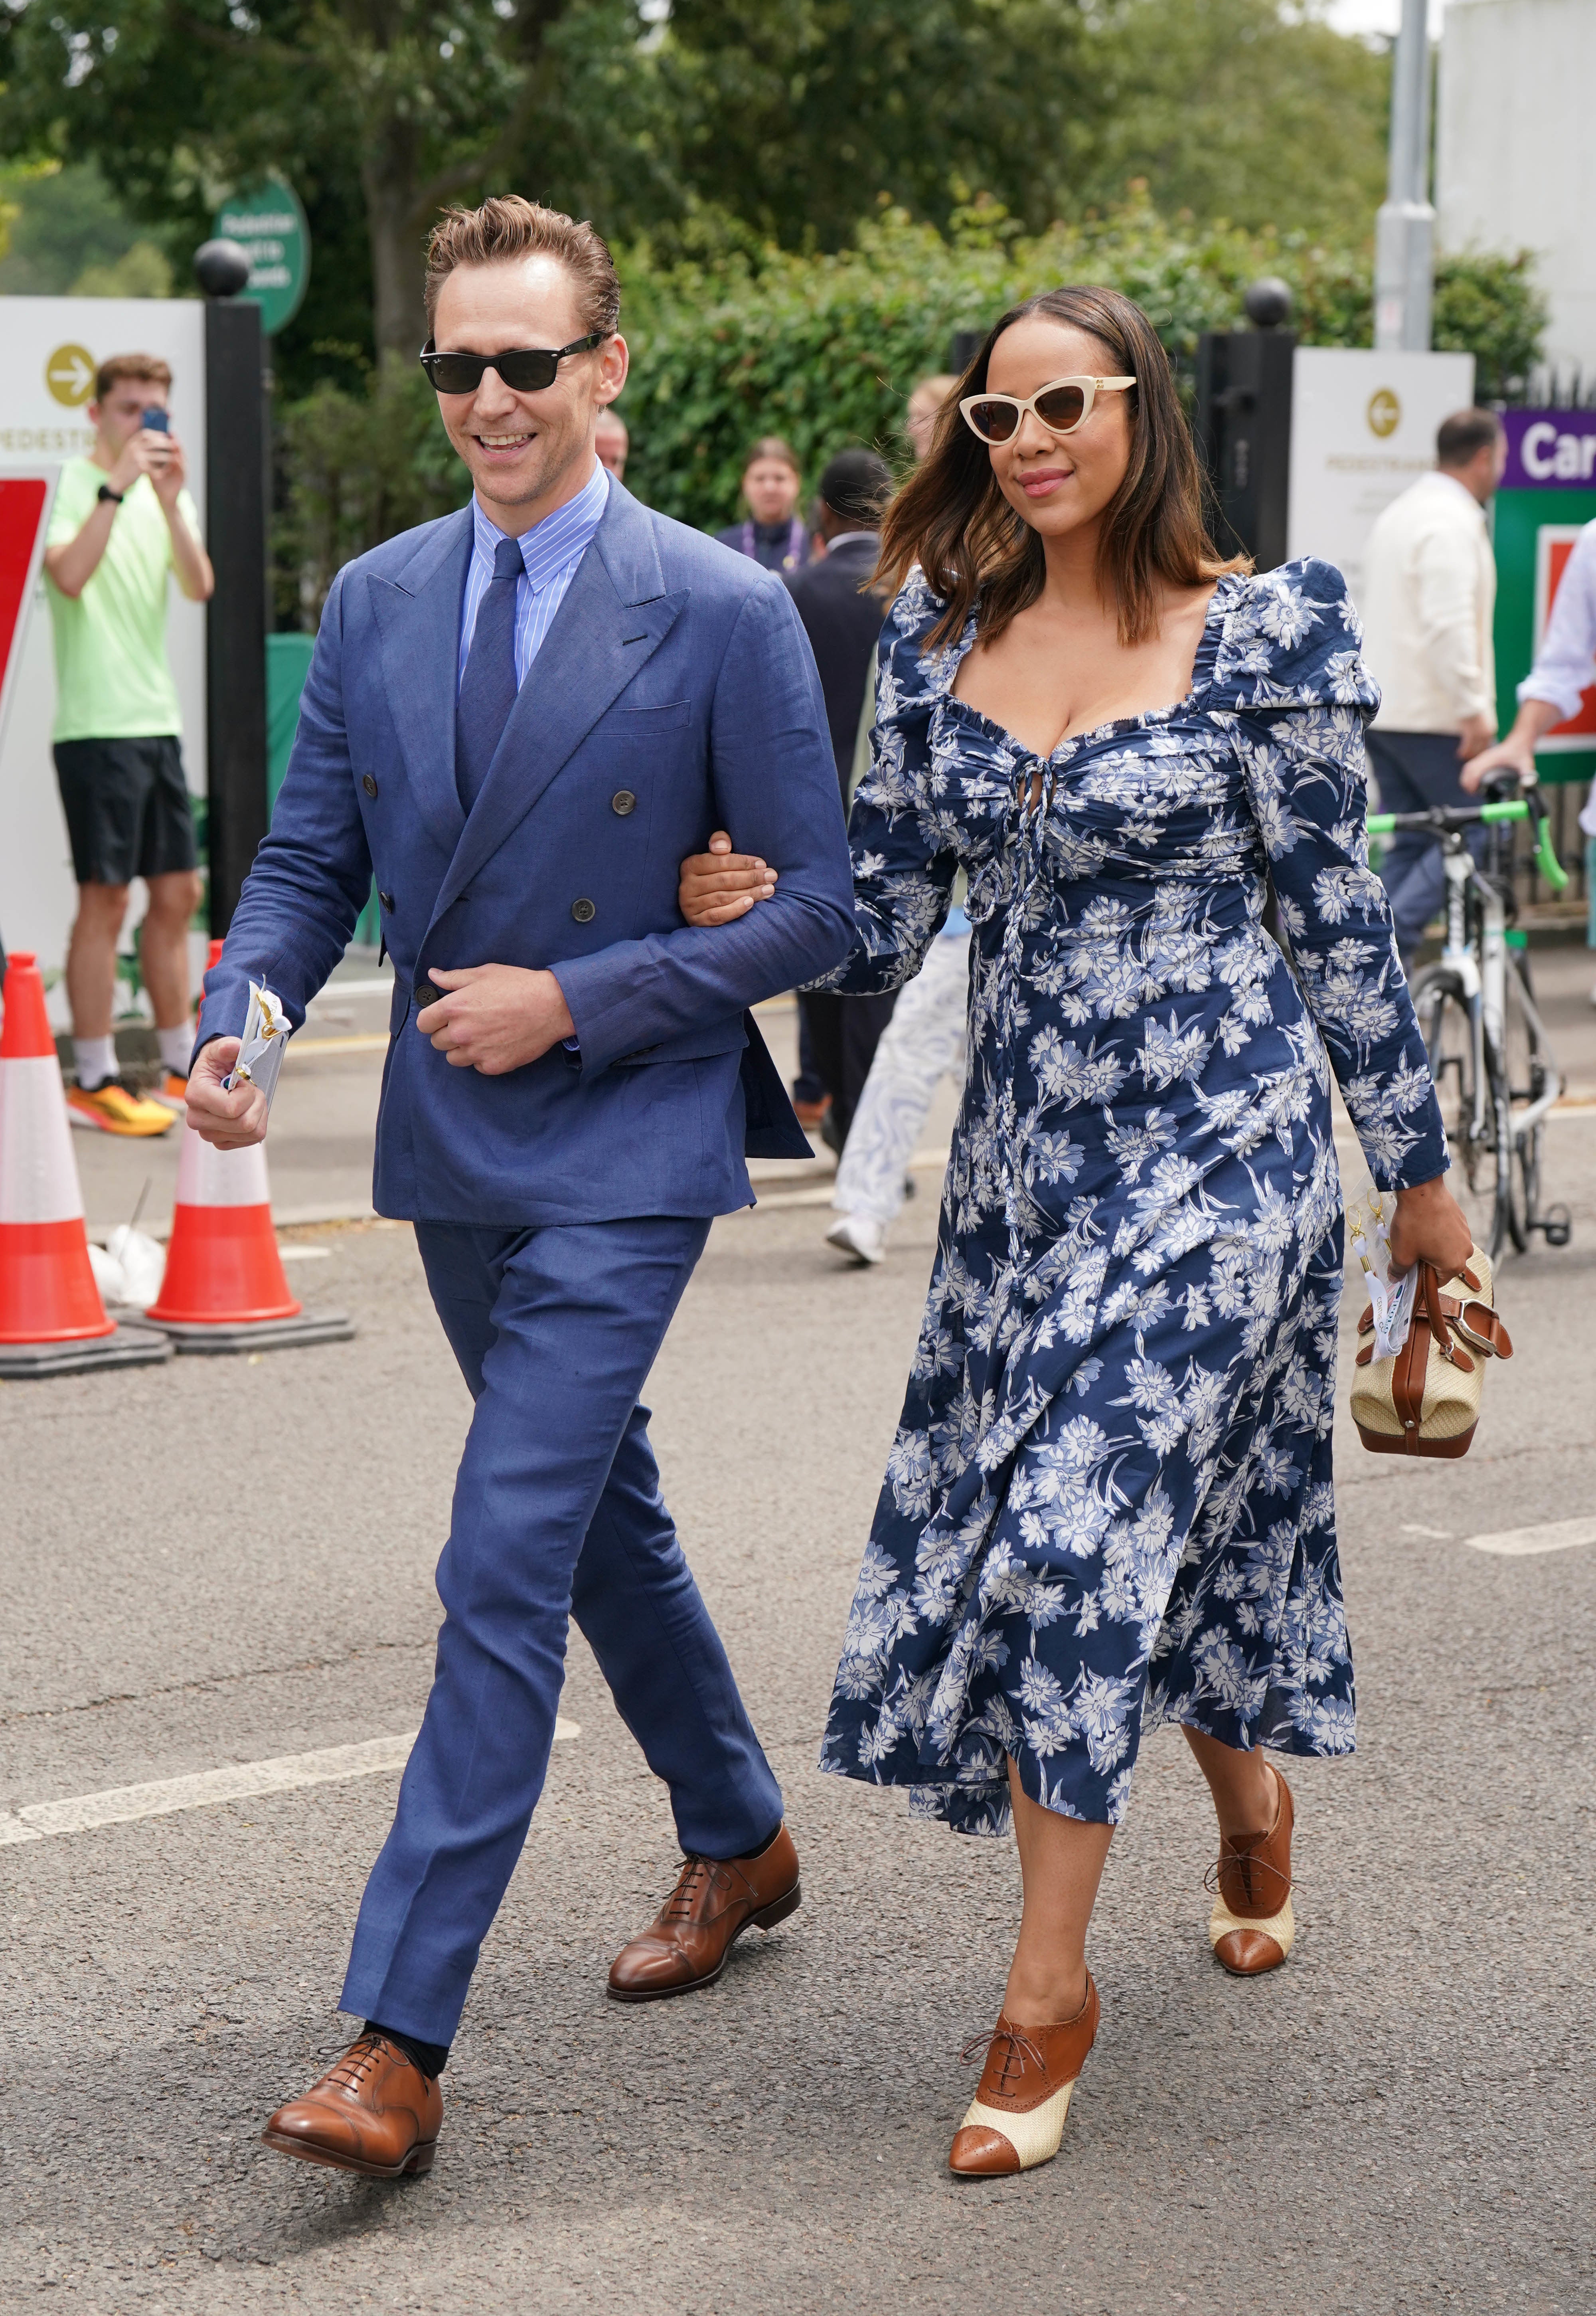 Tom Hiddleston and Zawe Ashton arriving at Wimbledon day 14